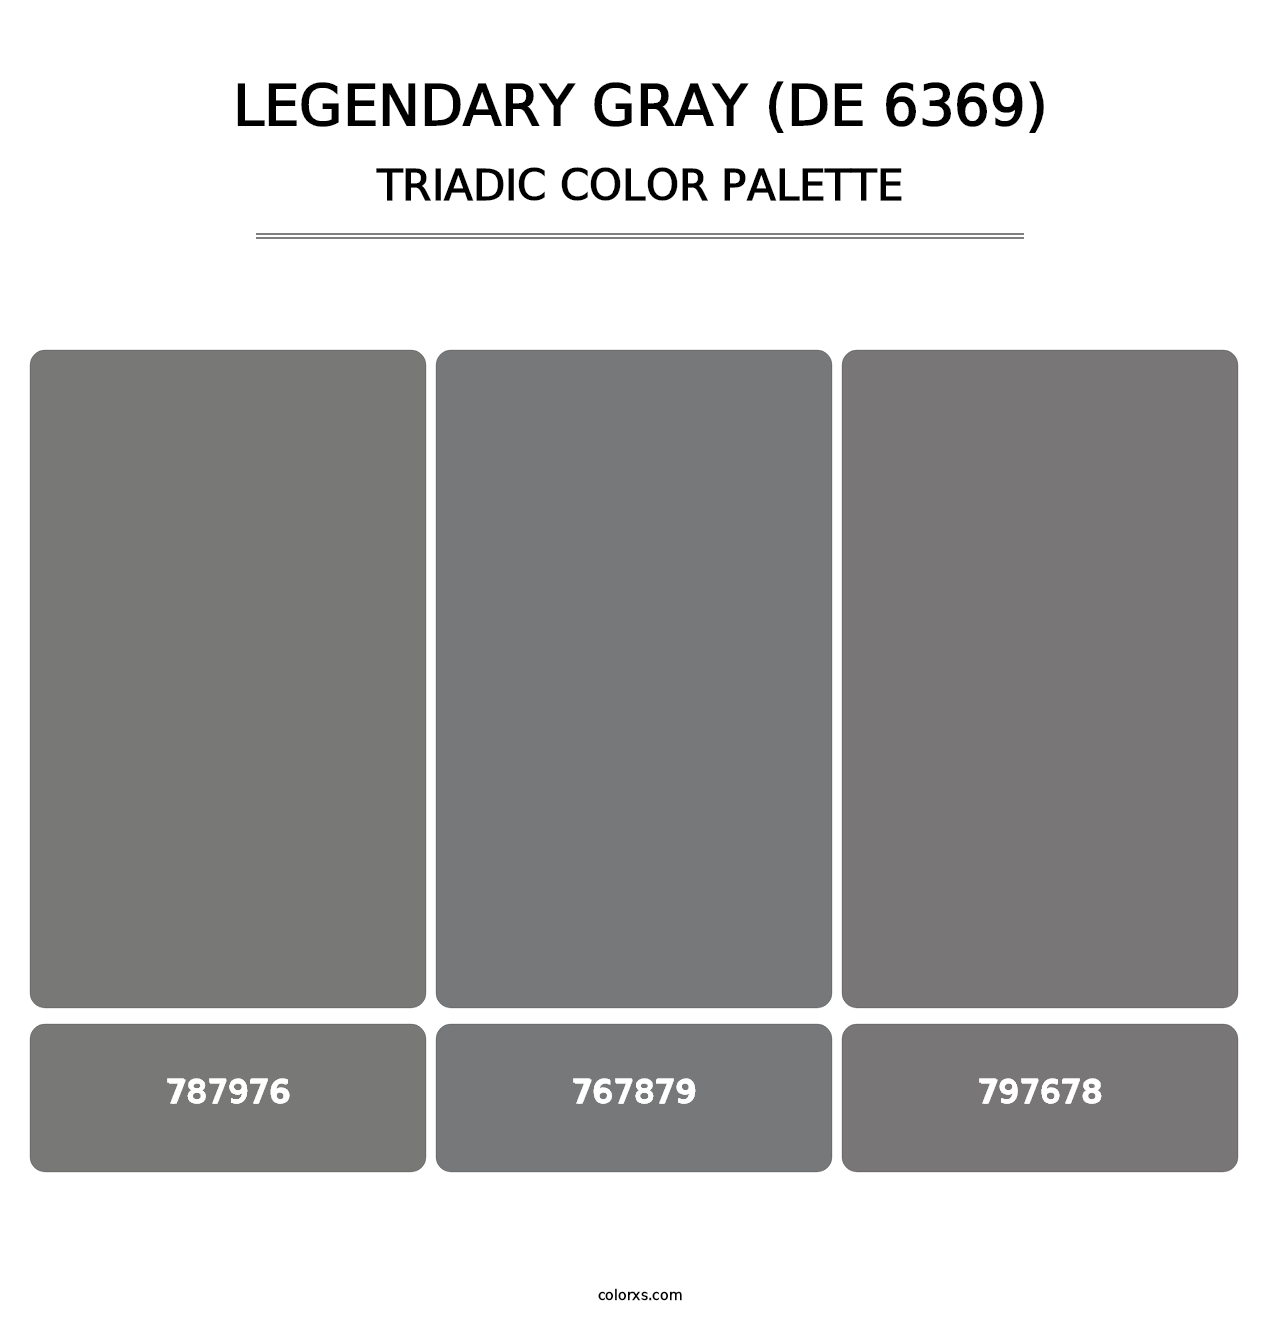 Legendary Gray (DE 6369) - Triadic Color Palette